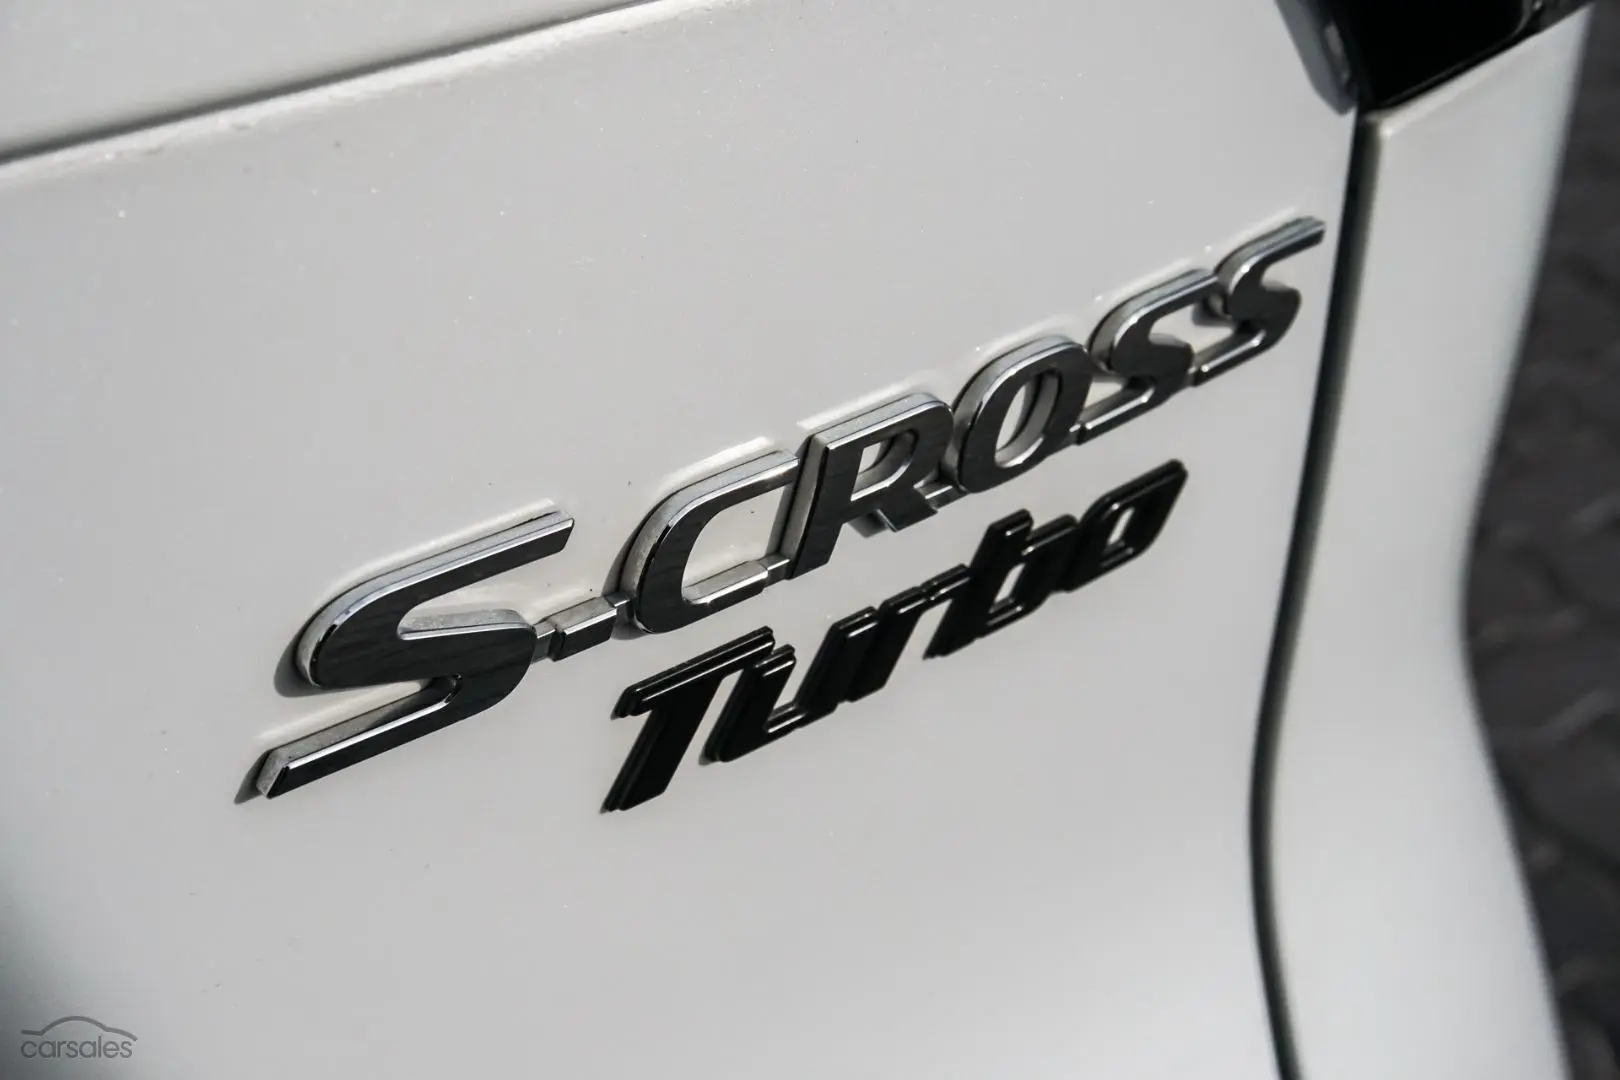 2022 Suzuki S-Cross Image 14